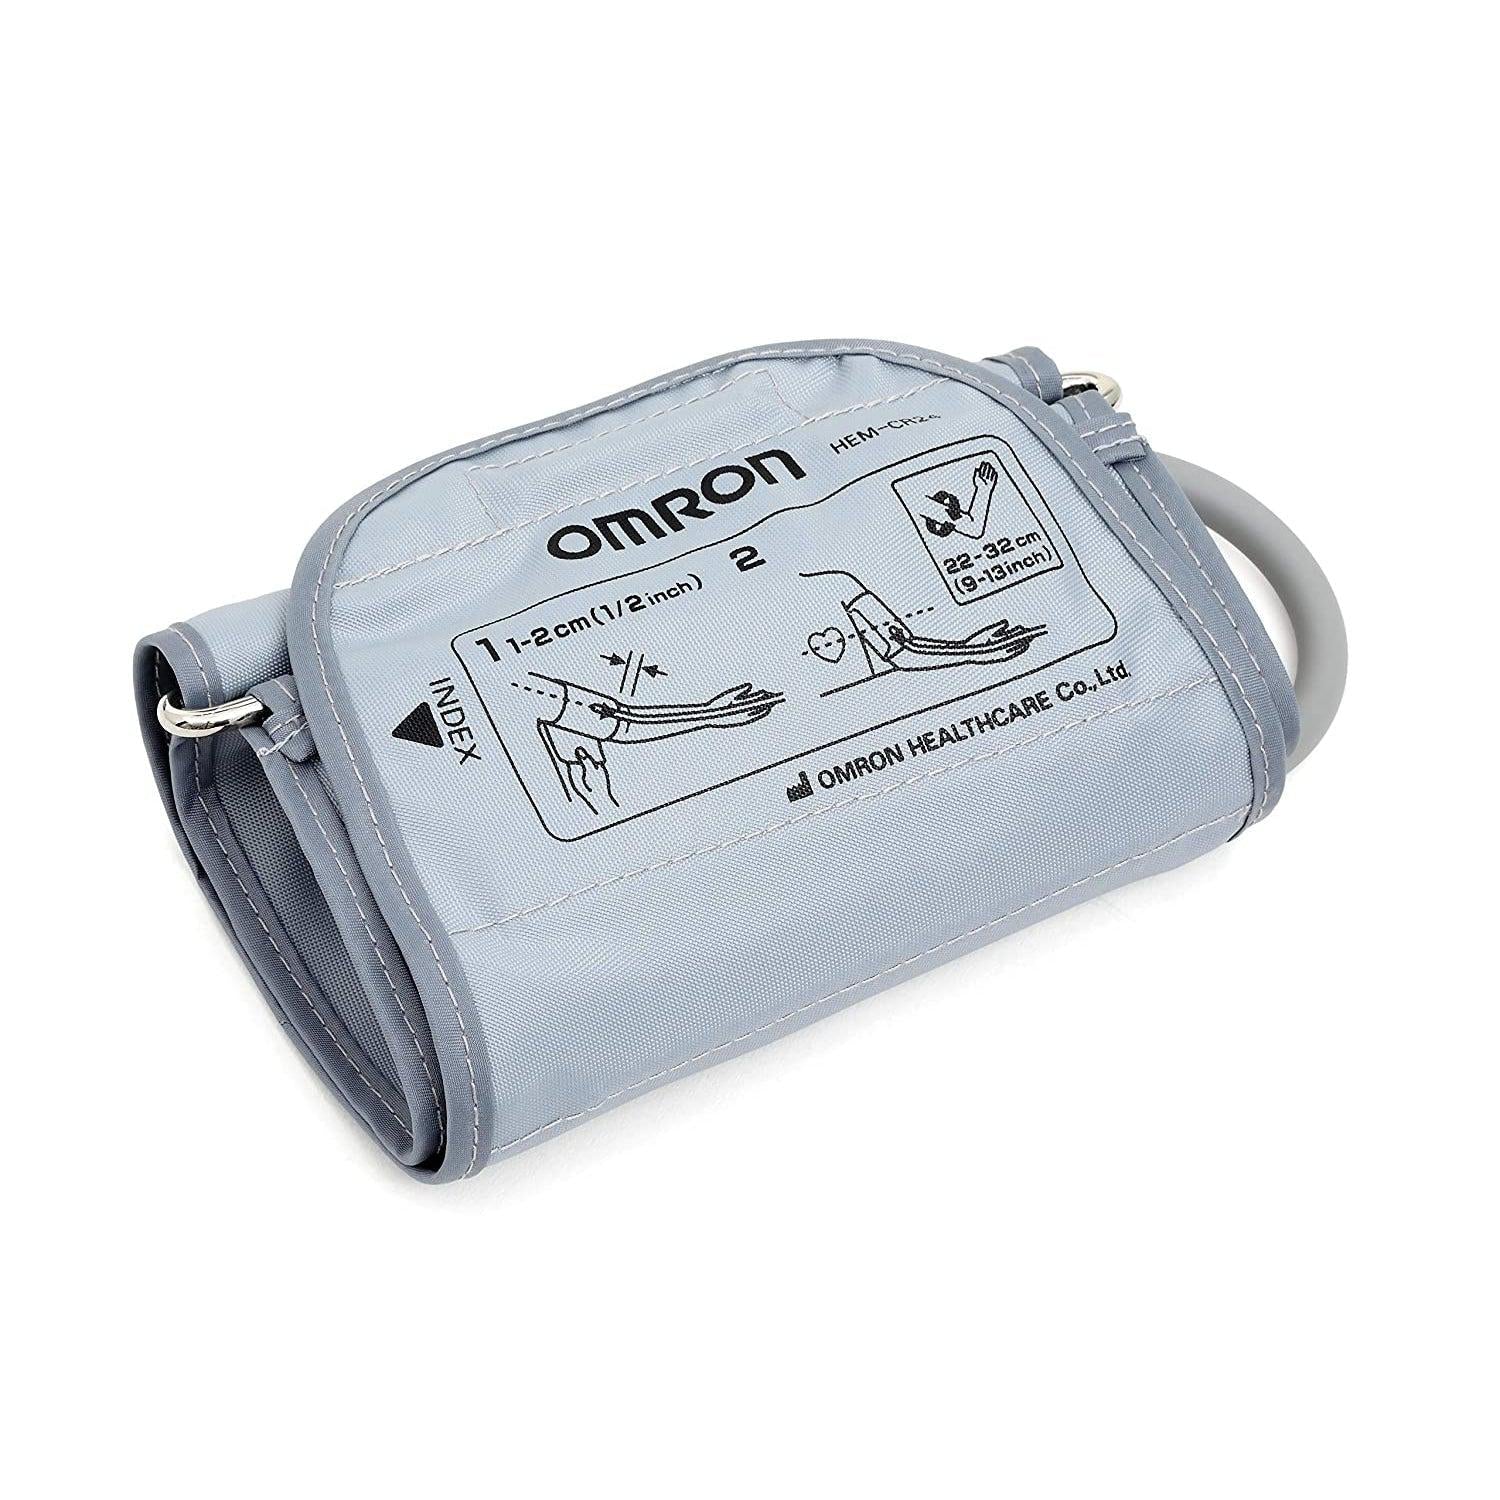 https://cdn.shopify.com/s/files/1/0073/6477/1911/files/omron-medium-cuff-22-32-cm-for-omron-upper-arm-blood-pressure-monitors.jpg?v=1701960388&width=1500